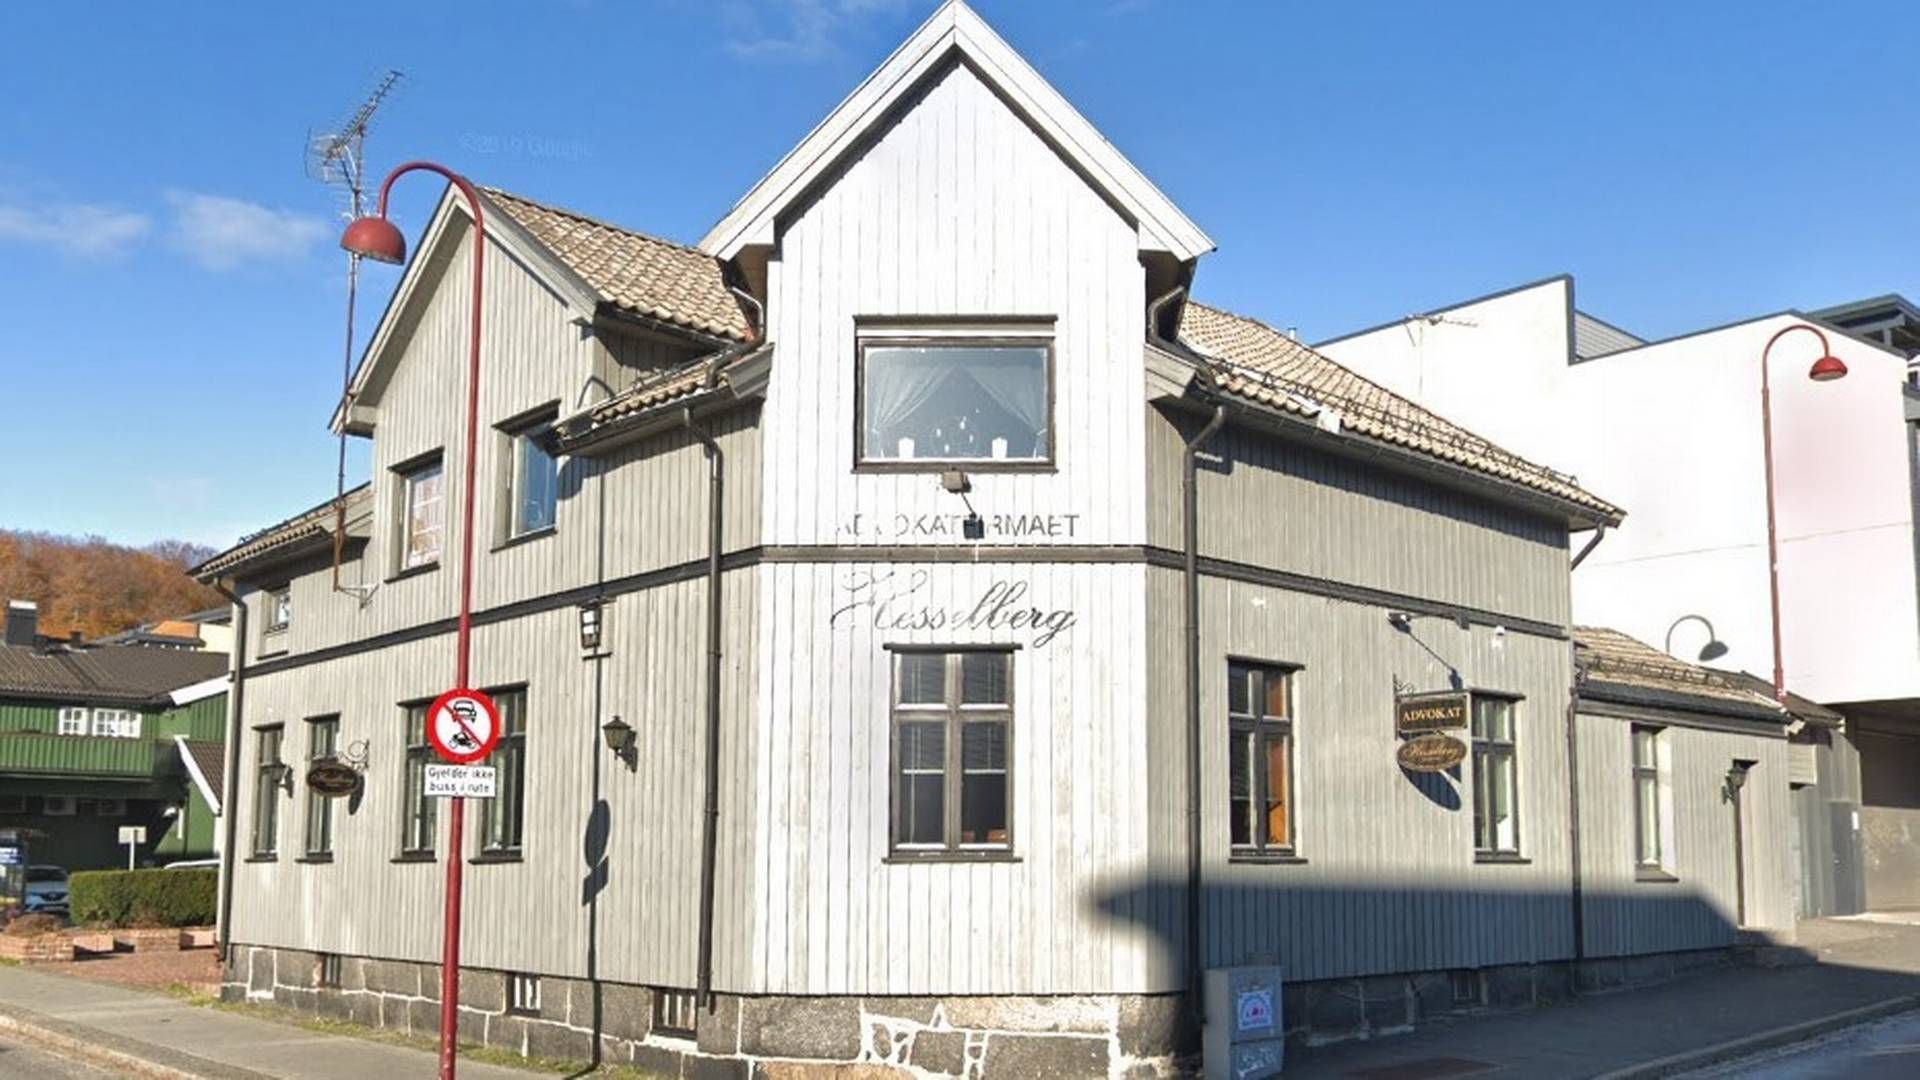 Advokatfirmaet, som nå har endret navn til A. Hesselberg AS, er registrert med adresse i Jegersborggata i Larvik. | Foto: Google Street View